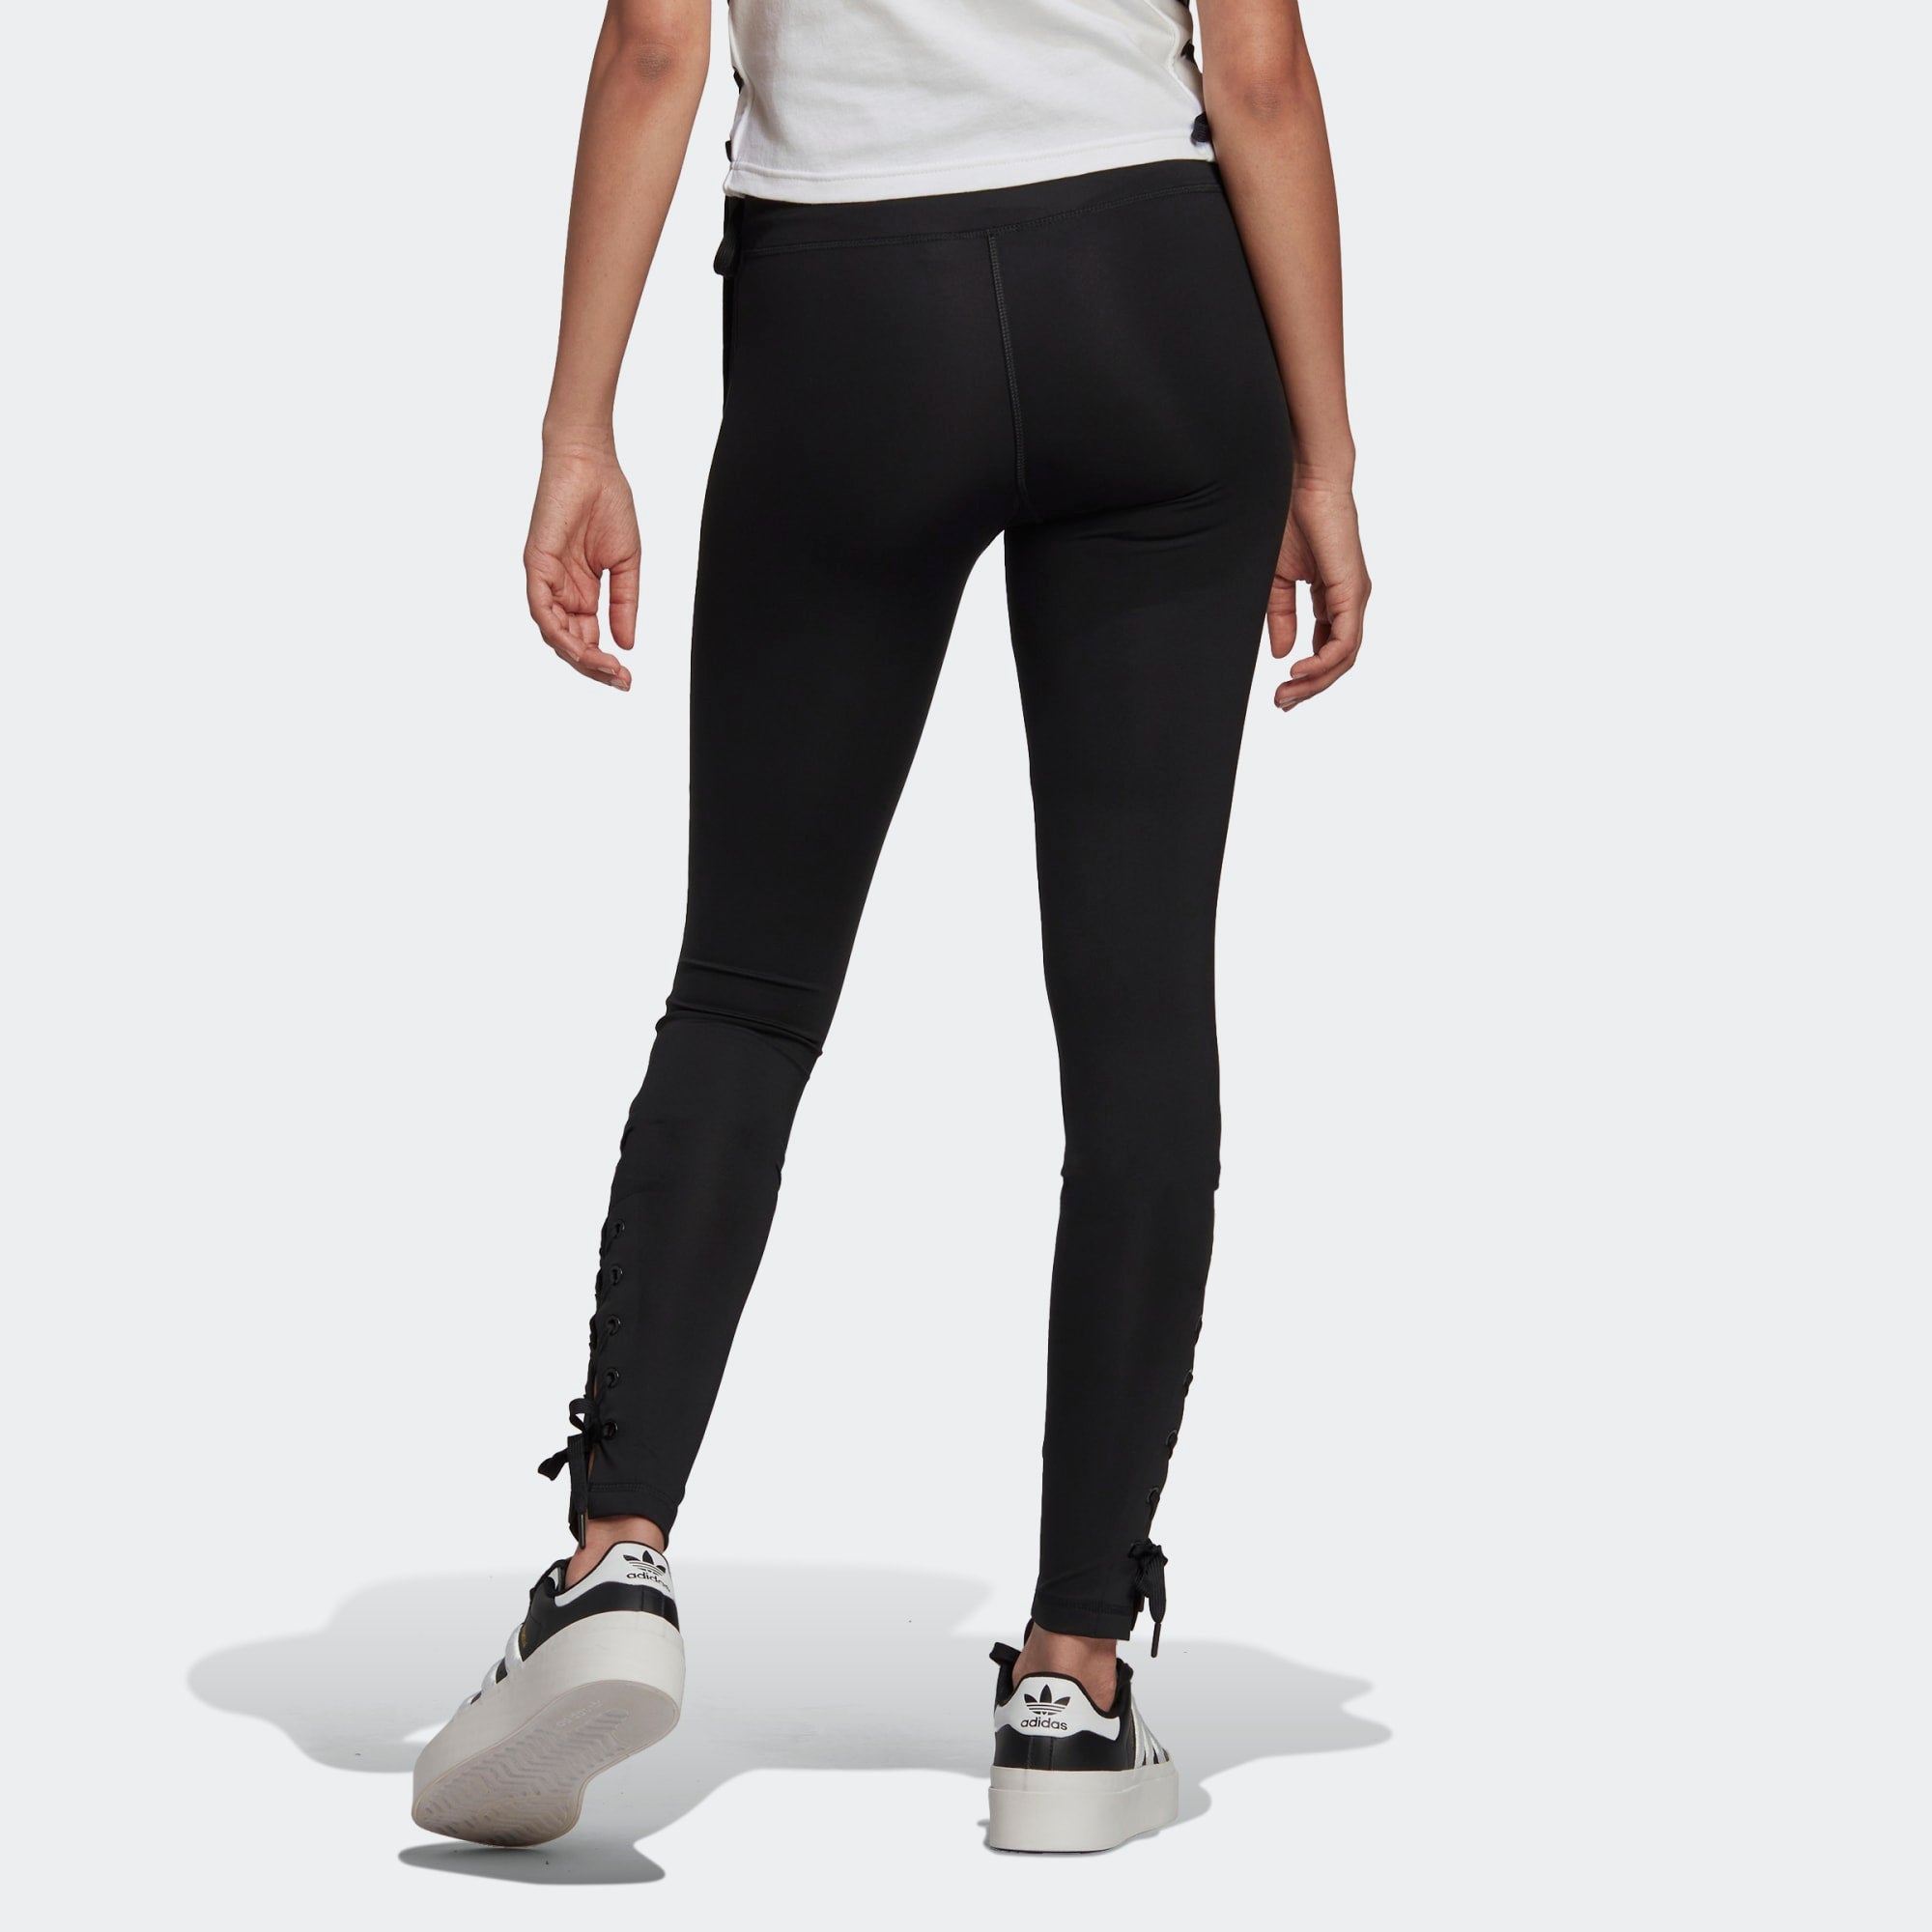 Adidas Women's Trefoil & 3 Stripes Leggings Black Grey Size 8 10 12 14 |  eBay